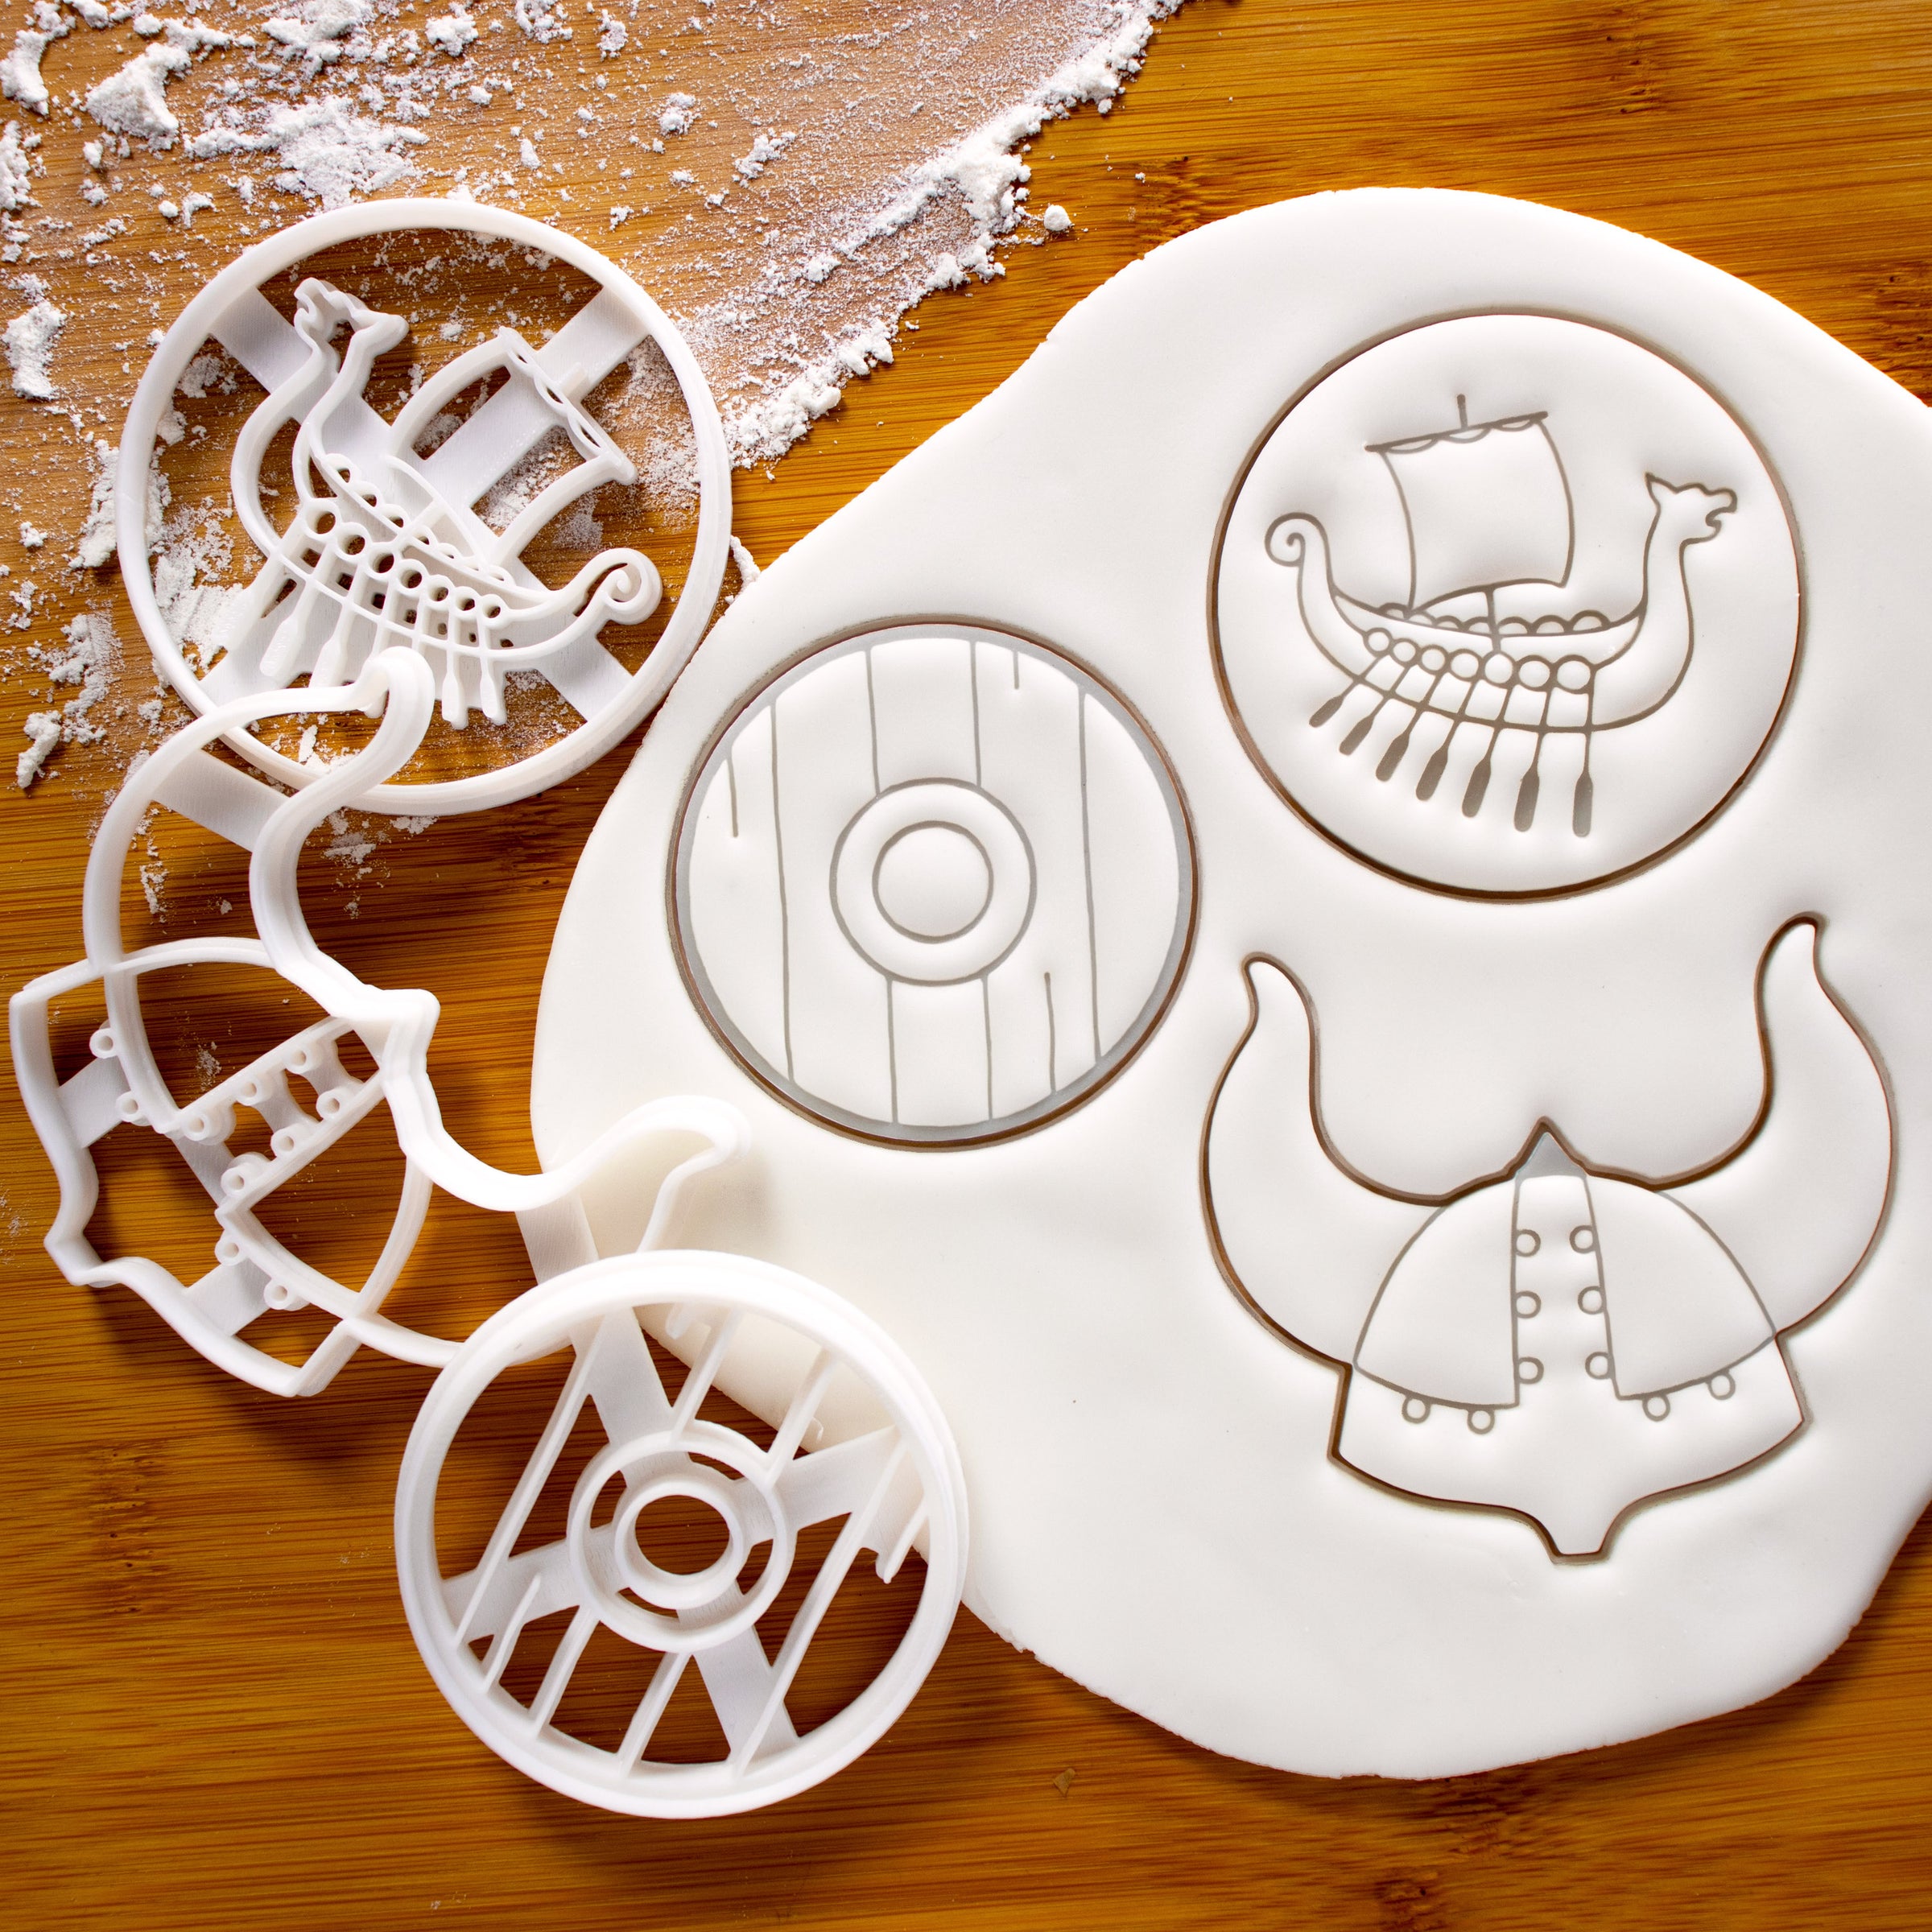 Set of 3 Viking theme Cookie Cutters: Viking Helmet, Viking Shield, and Viking Ship